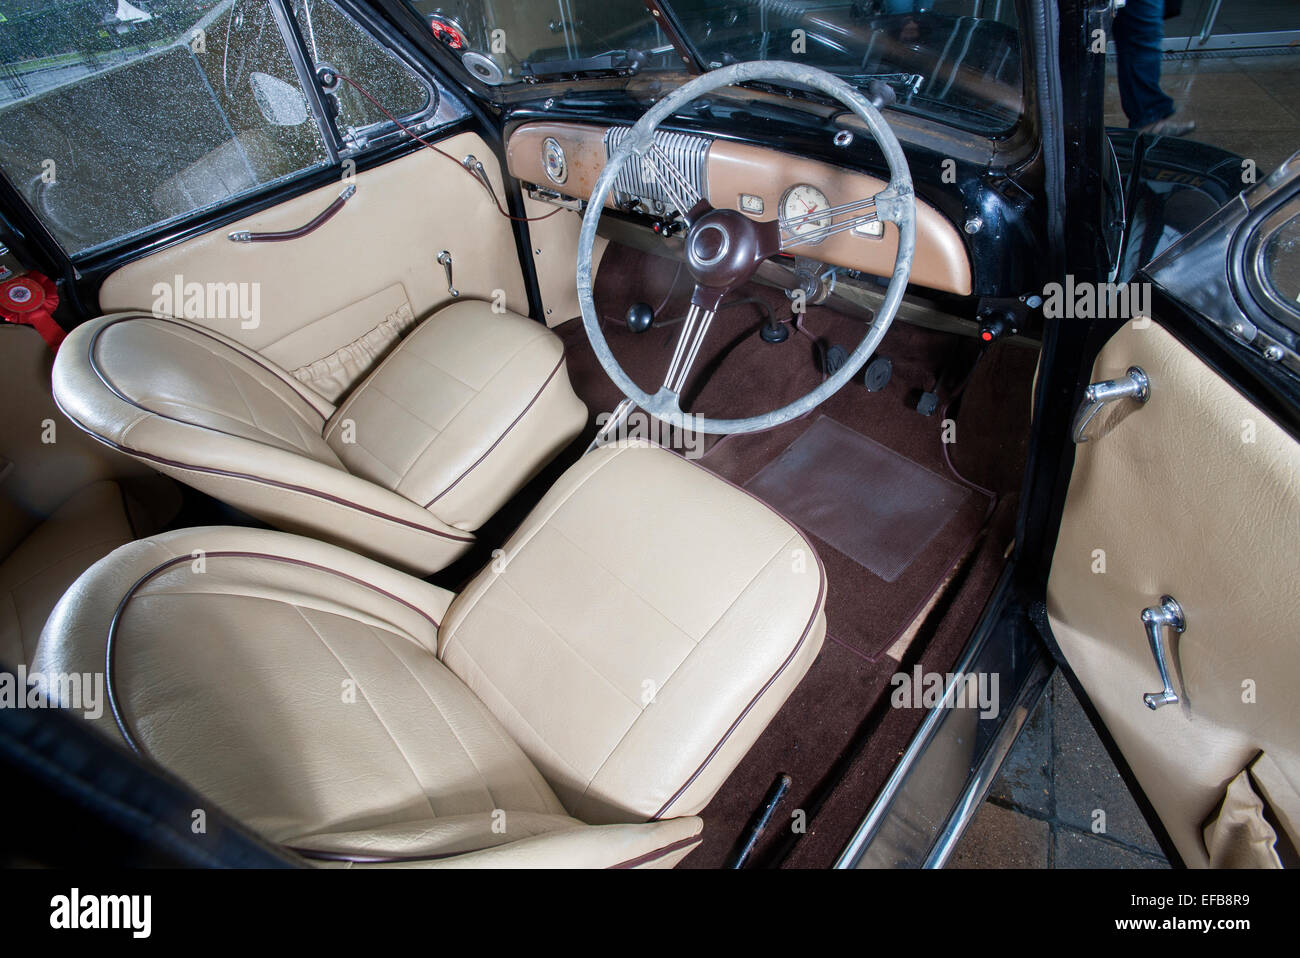 Morris Minor low light British classic car interior Stock Photo - Alamy